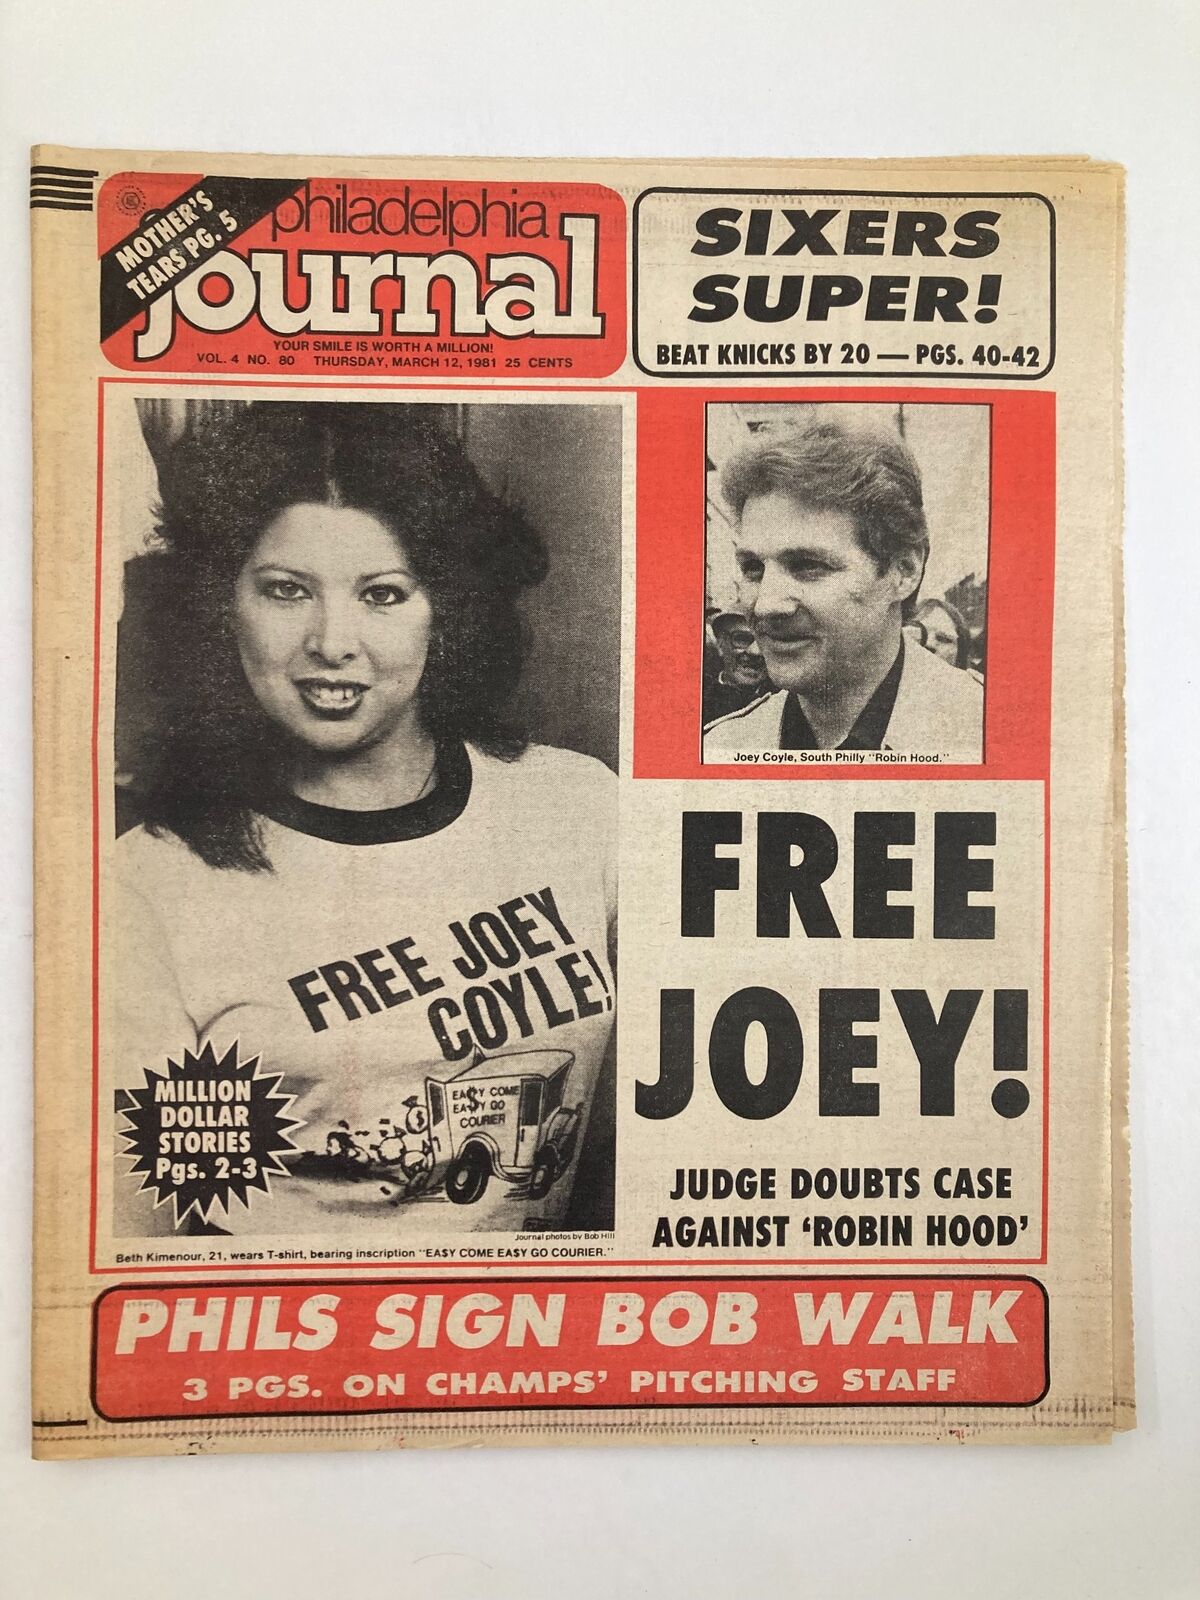 Philadelphia Journal Tabloid March 12 1981 Vol 4 #80 Joey Coyle, Beth Kimenour